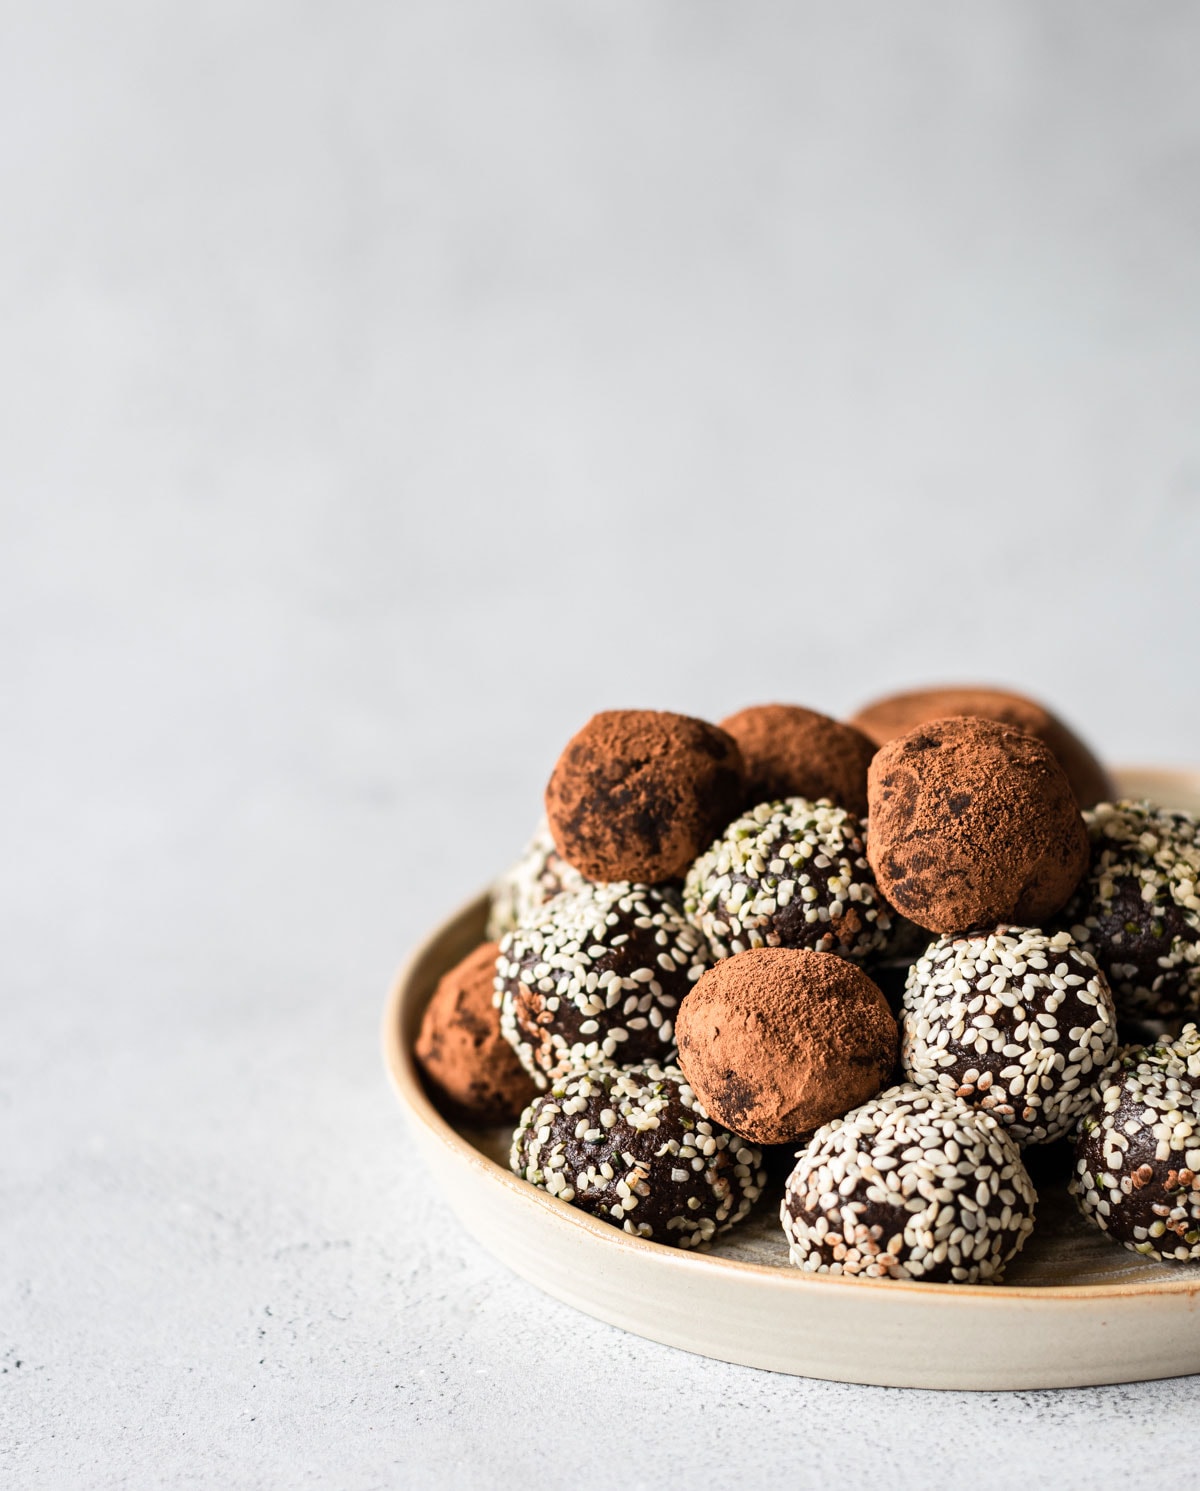 chocolate tahini bliss balls on plate